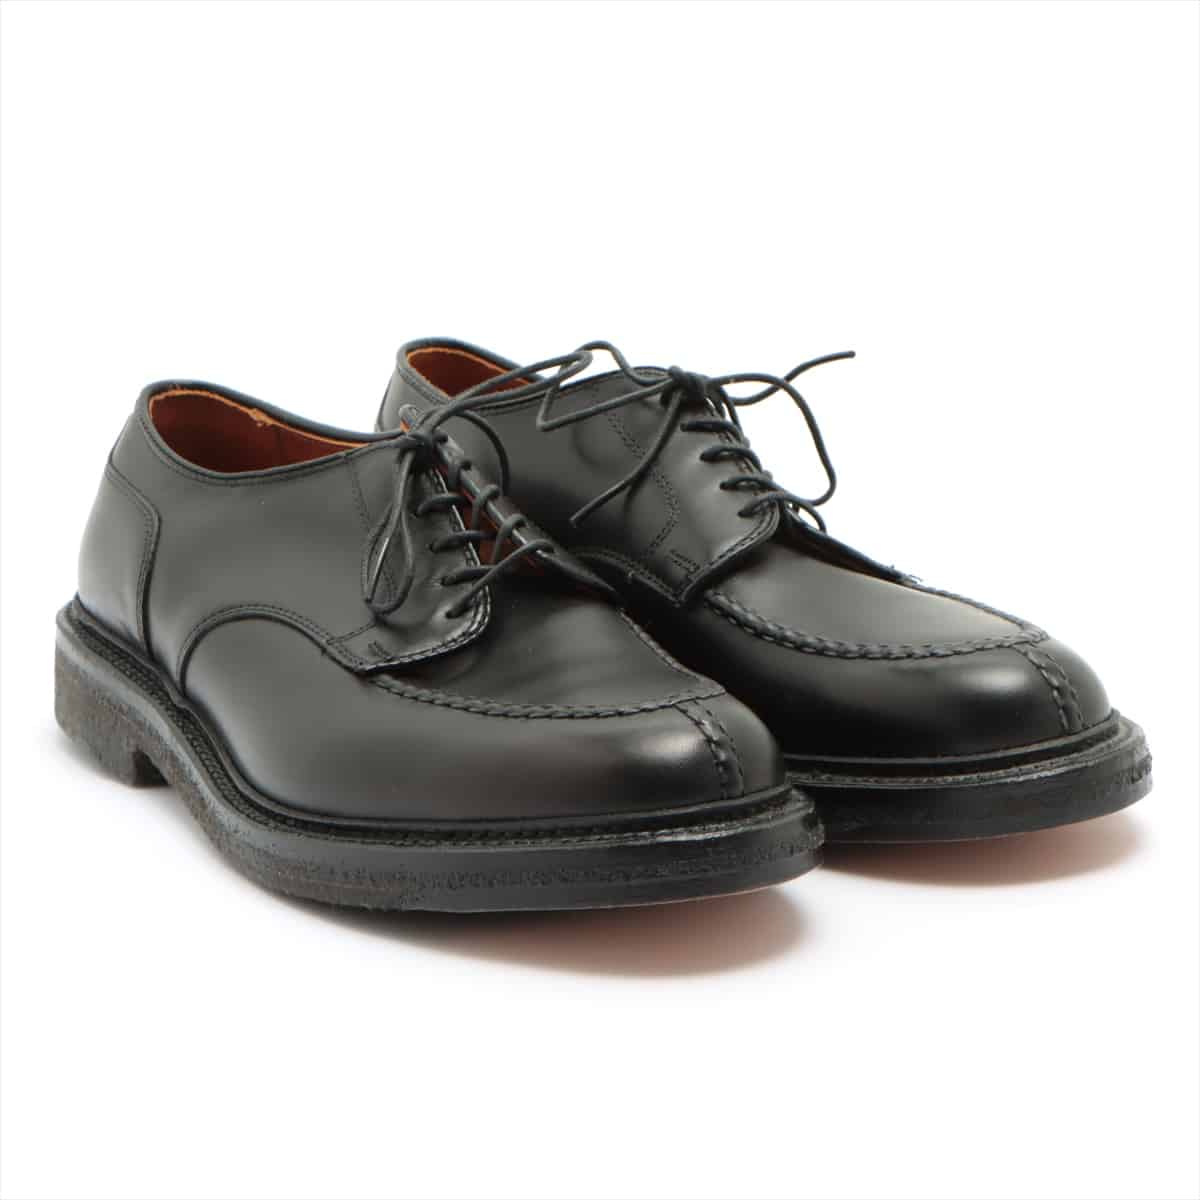 Alden Leather Dress shoes 9 Men's Black 2965